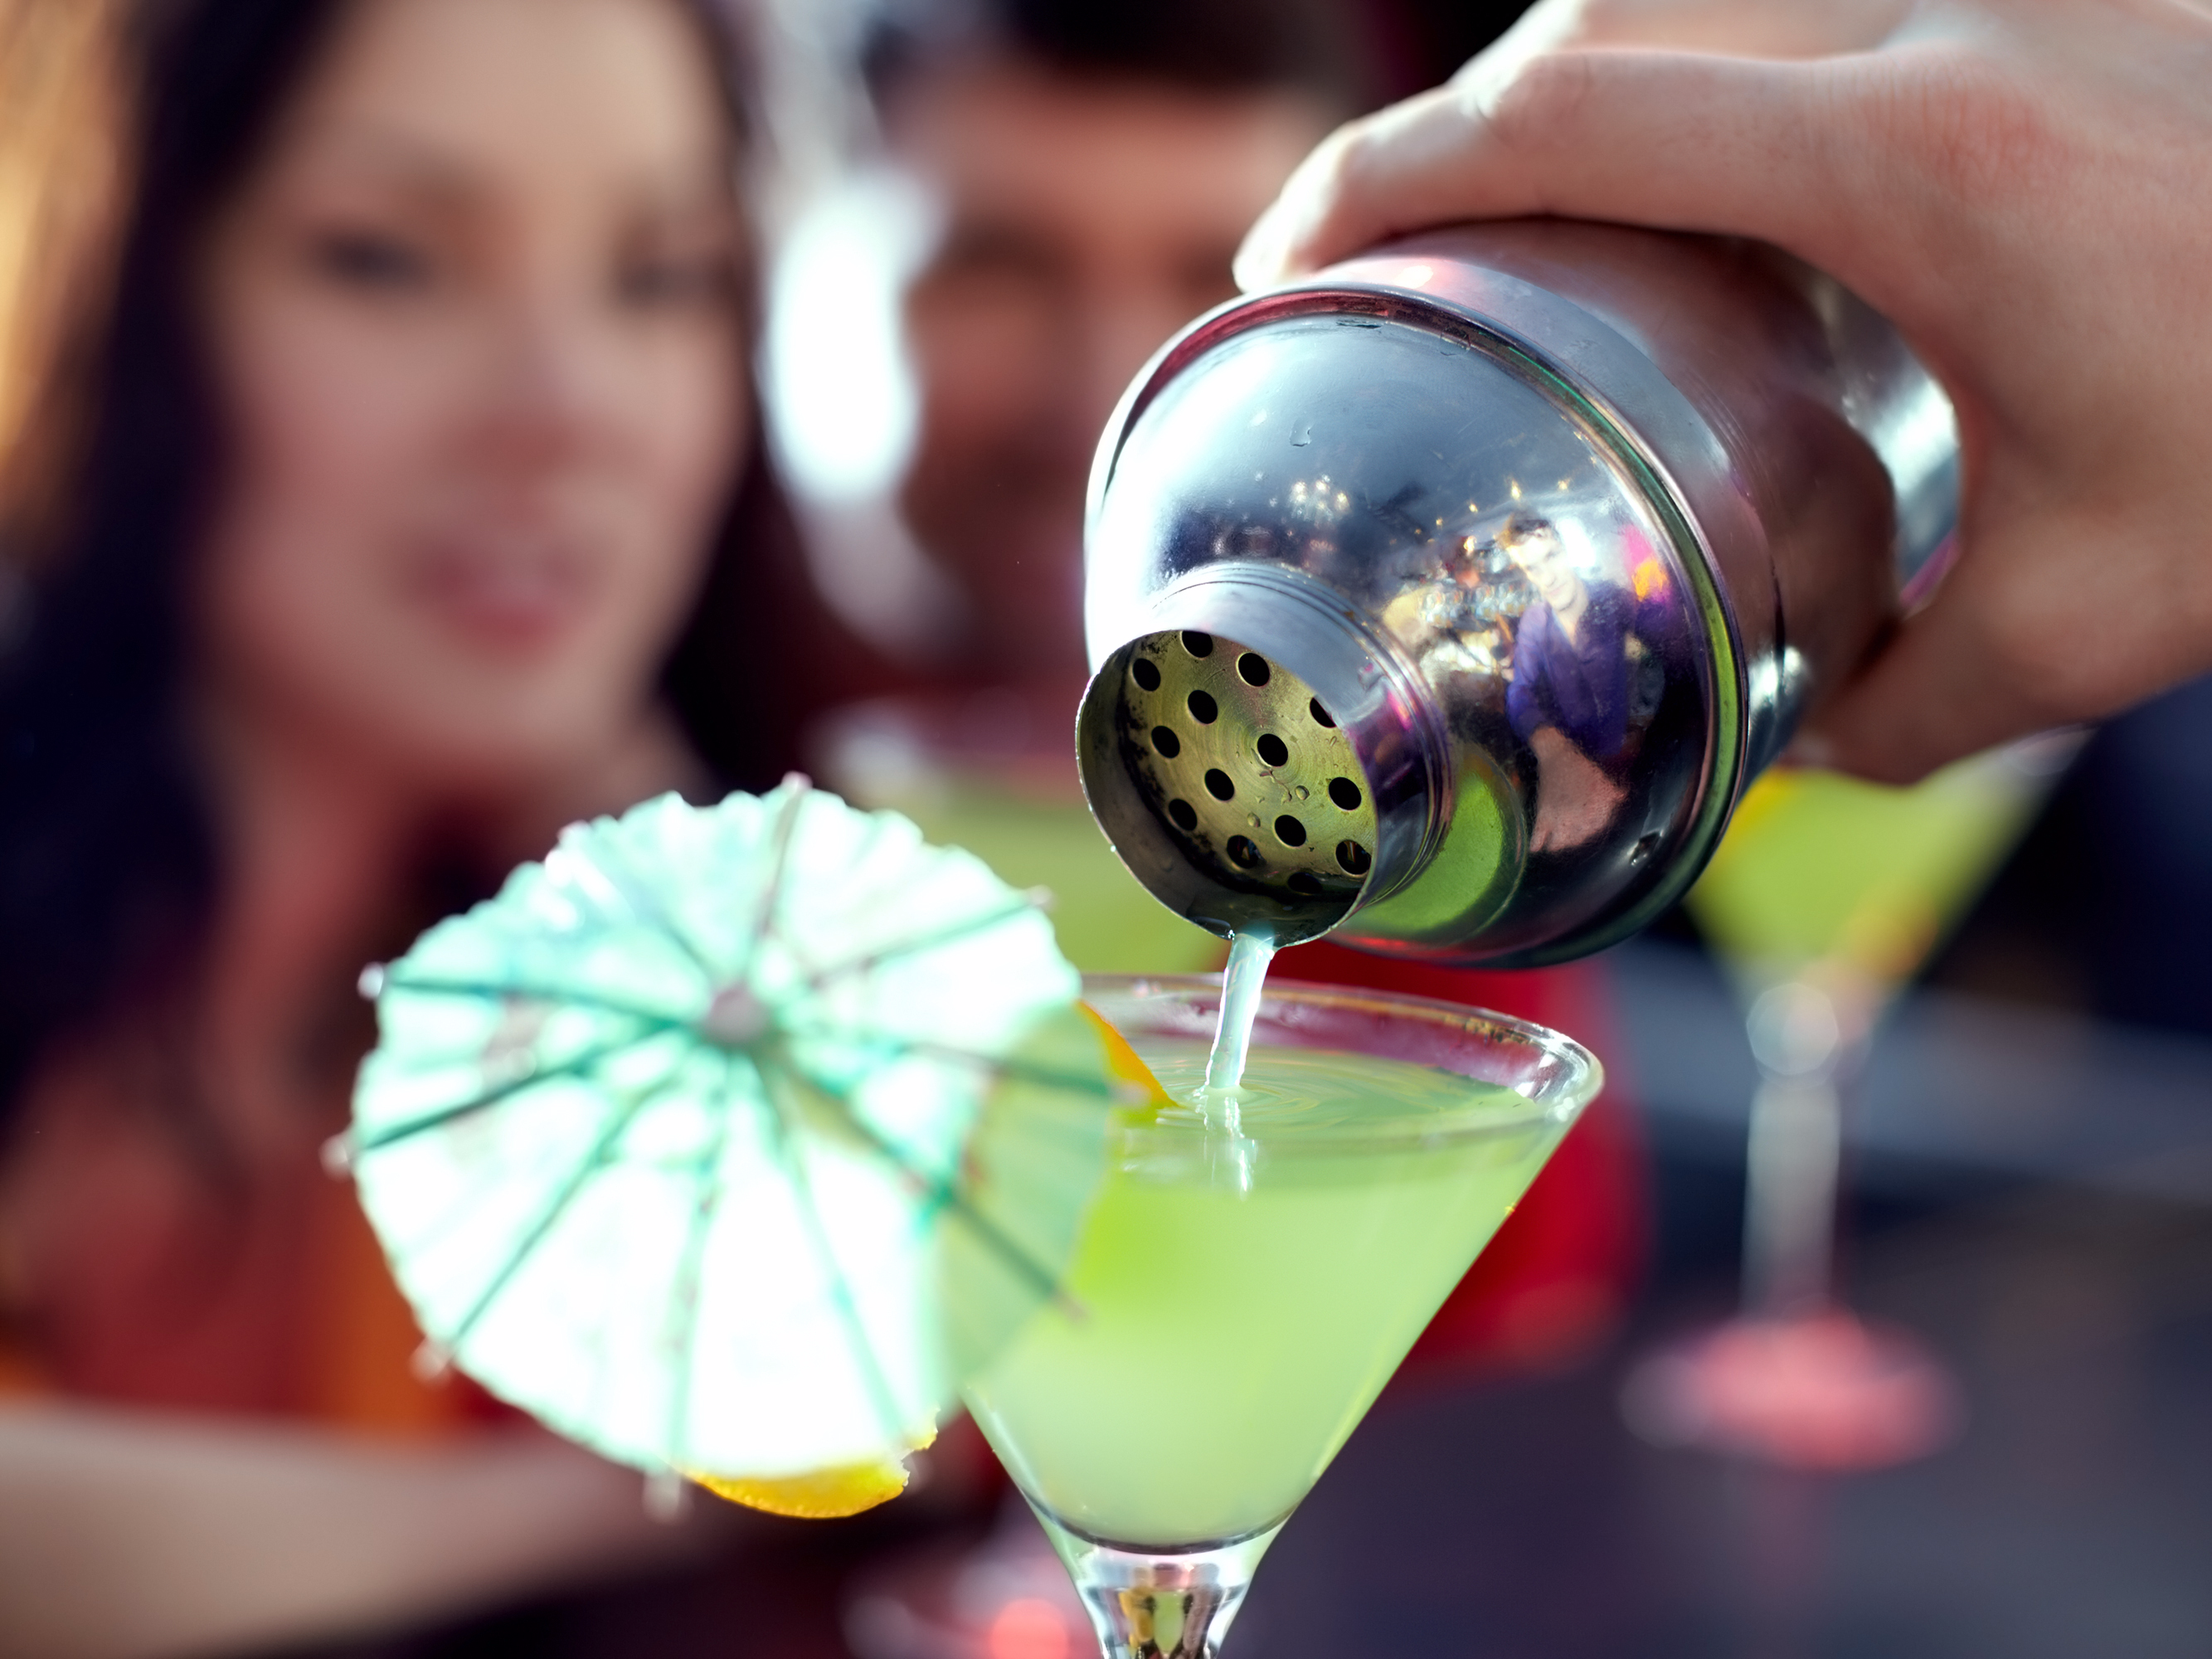 Cocktail umbrella's secret messages - Business Insider